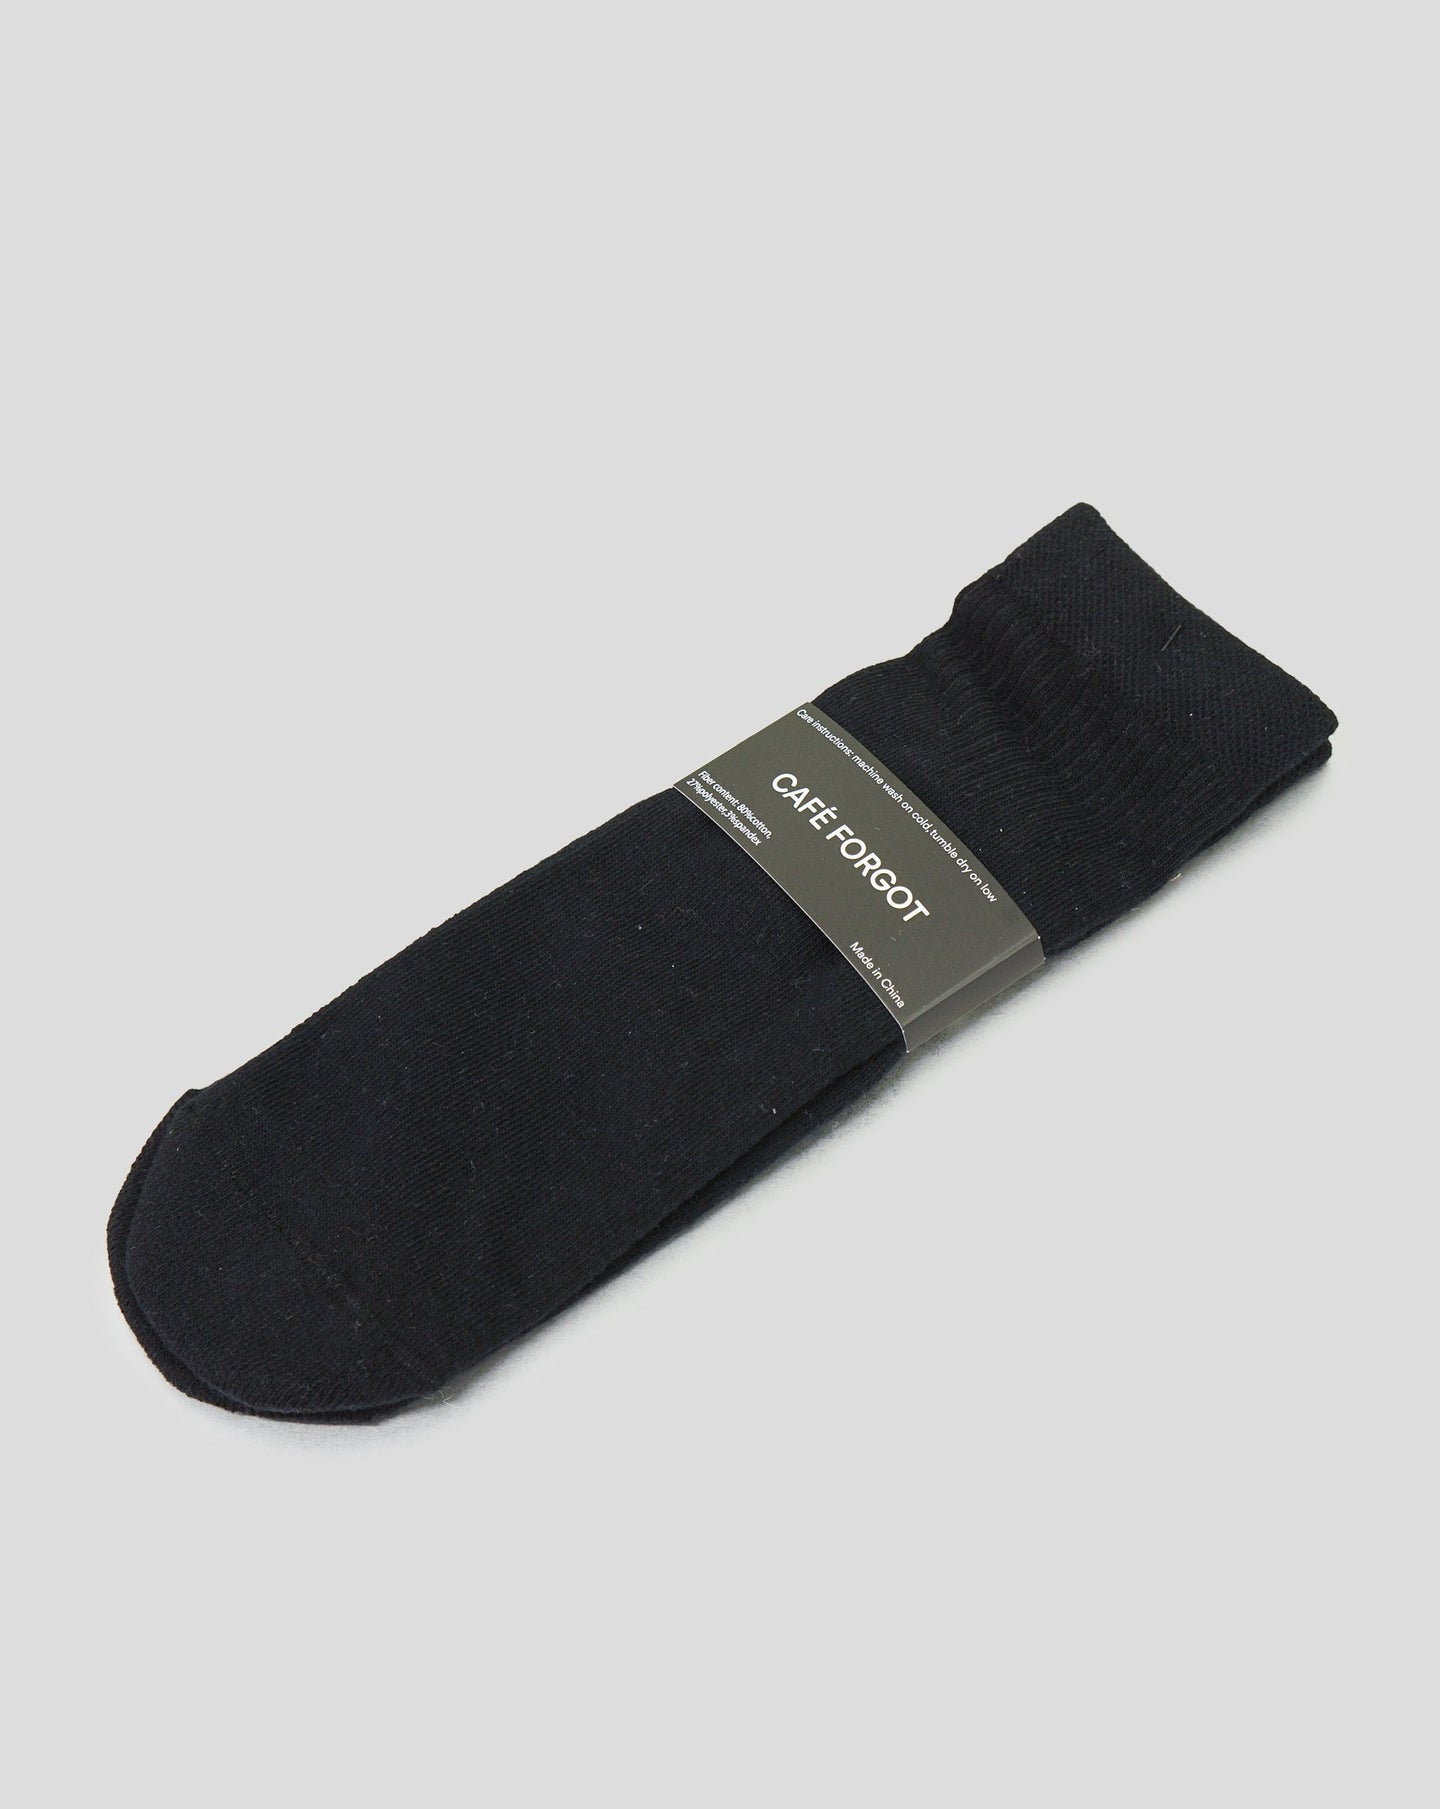 Café Forgot - black socks (1 pair)